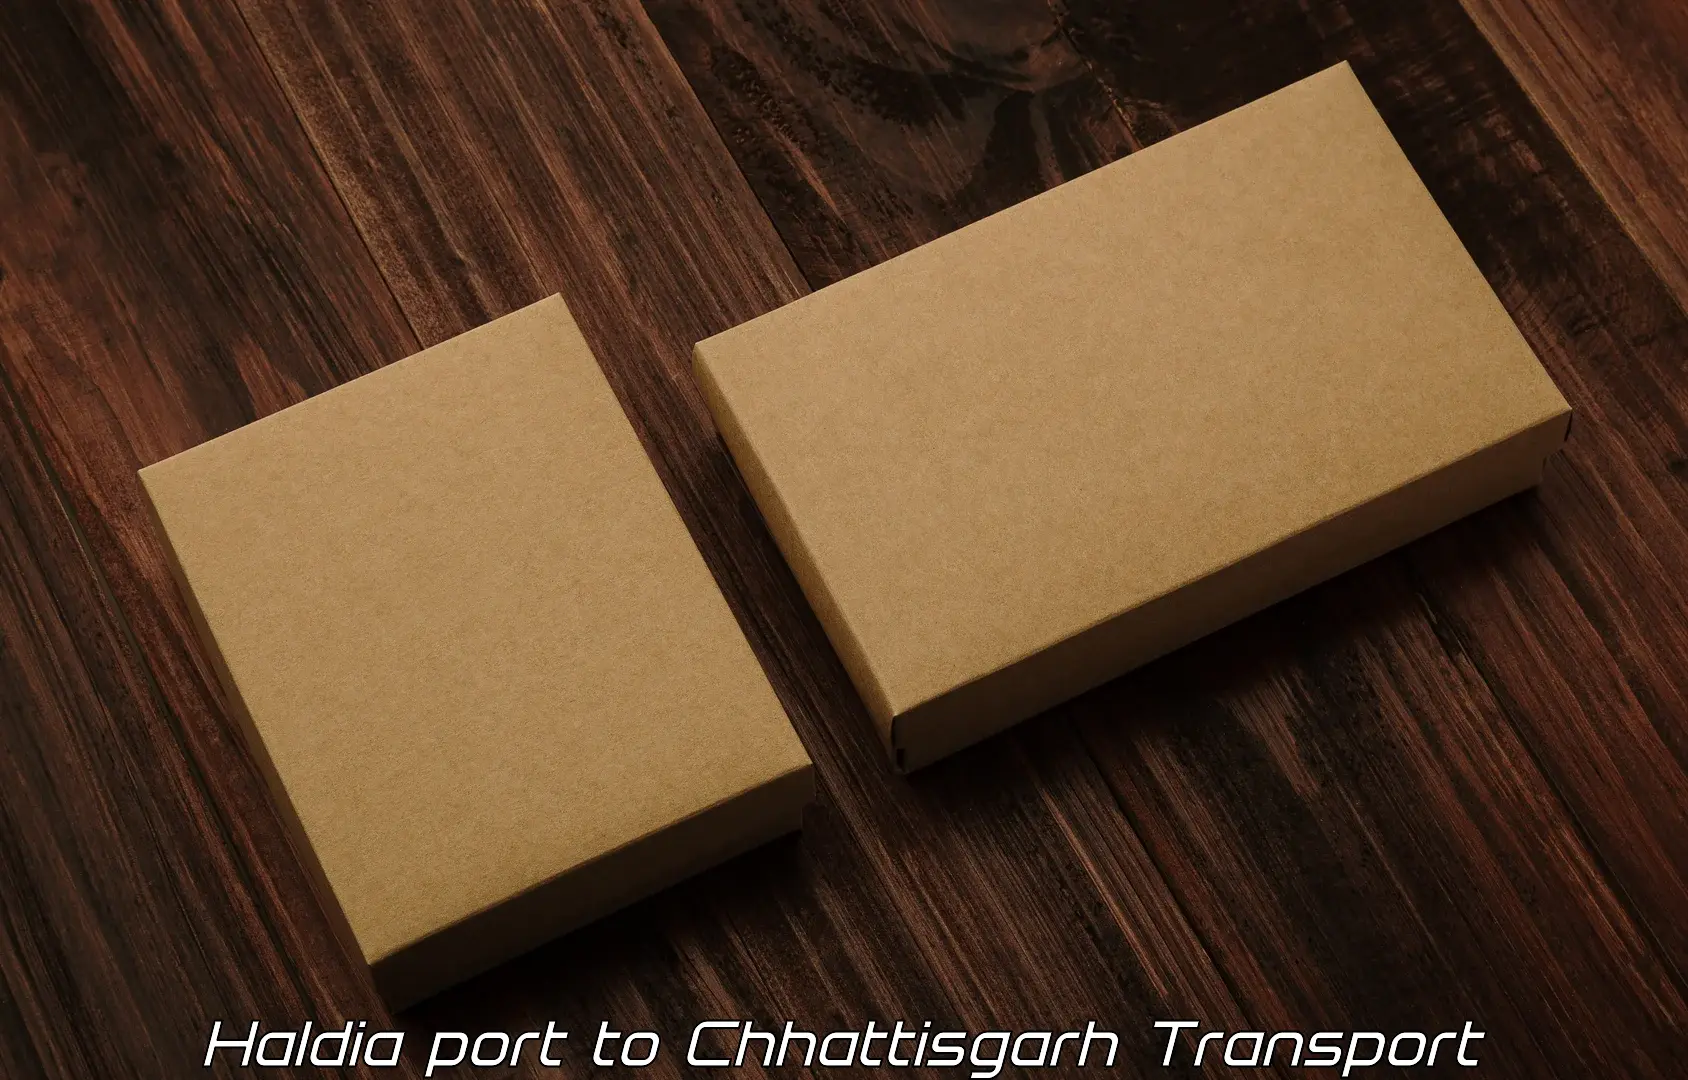 Online transport Haldia port to Raigarh Chhattisgarh